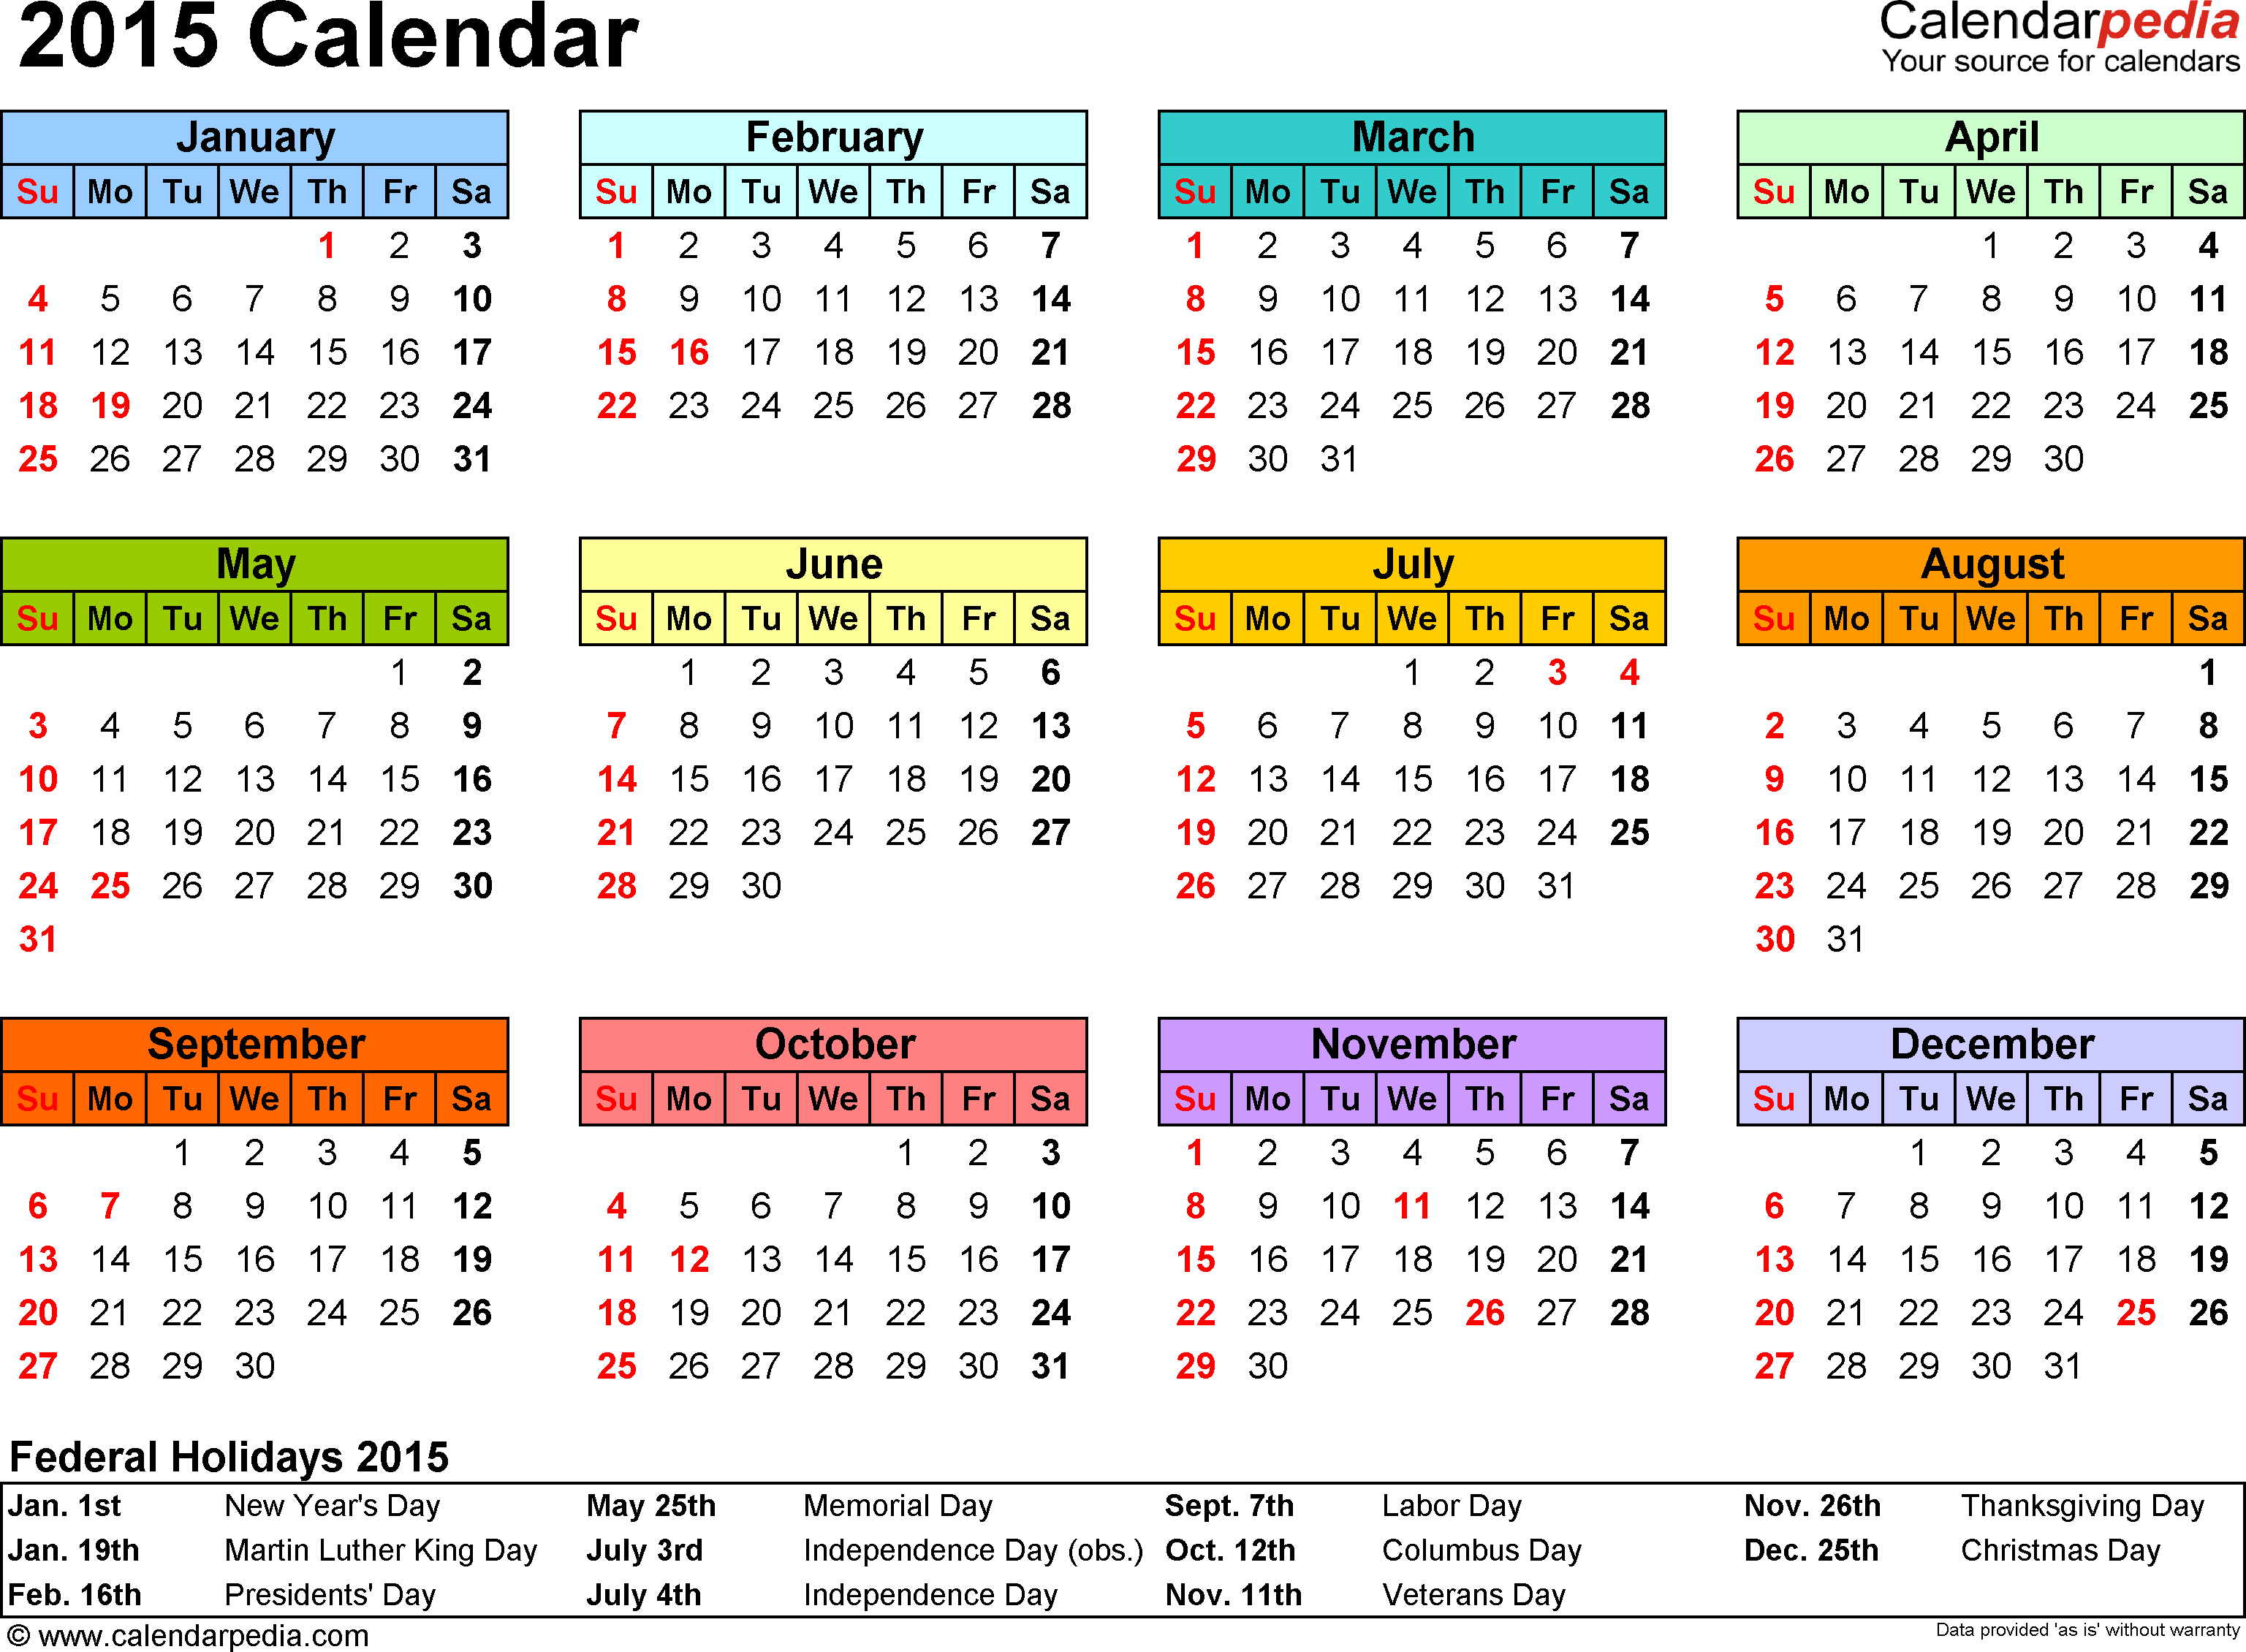 2015 2020 Calendar Template - Wpa.wpart.co